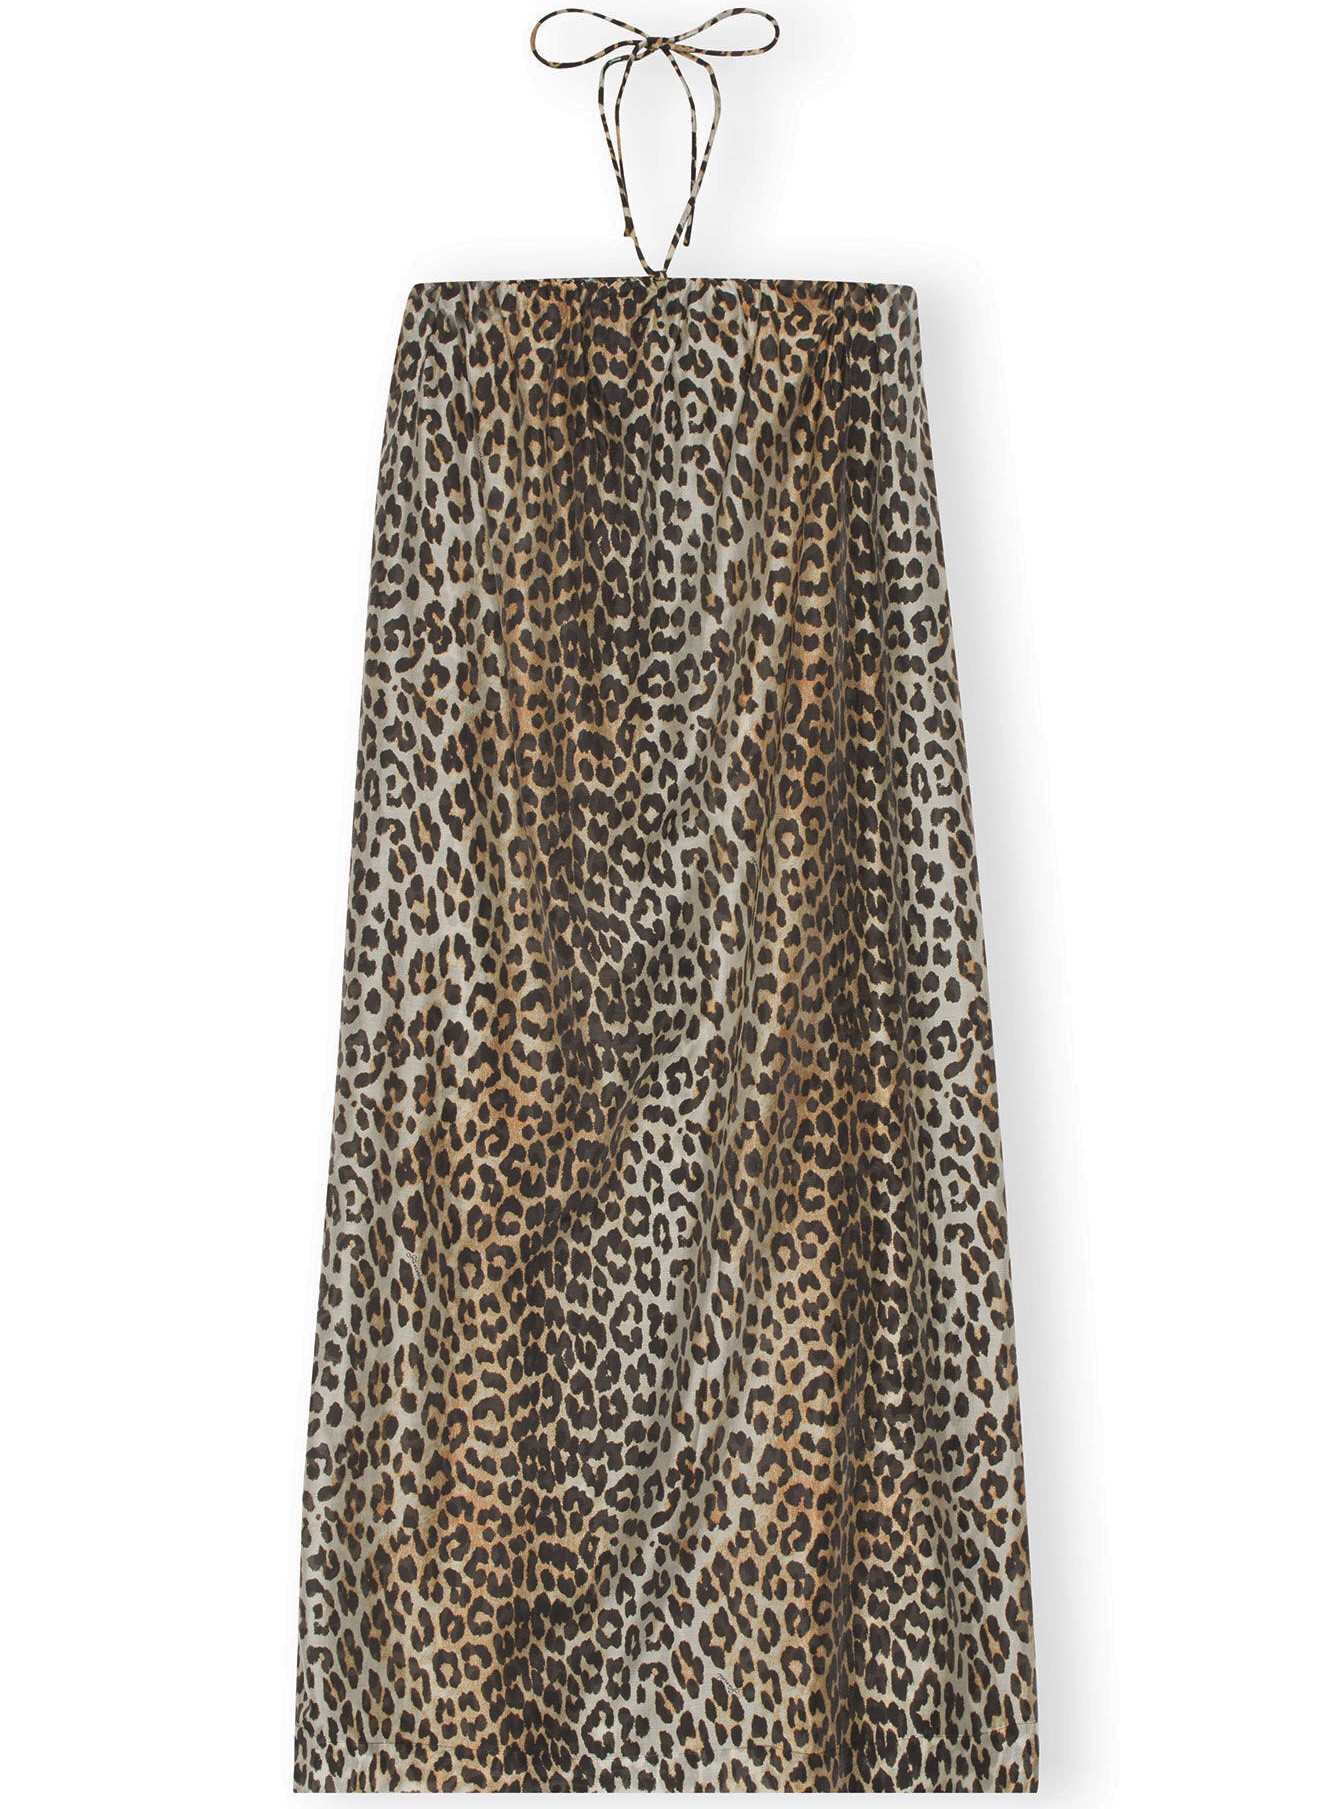 GANNI Sheer Voile Maxi Strap Dress in Leopard